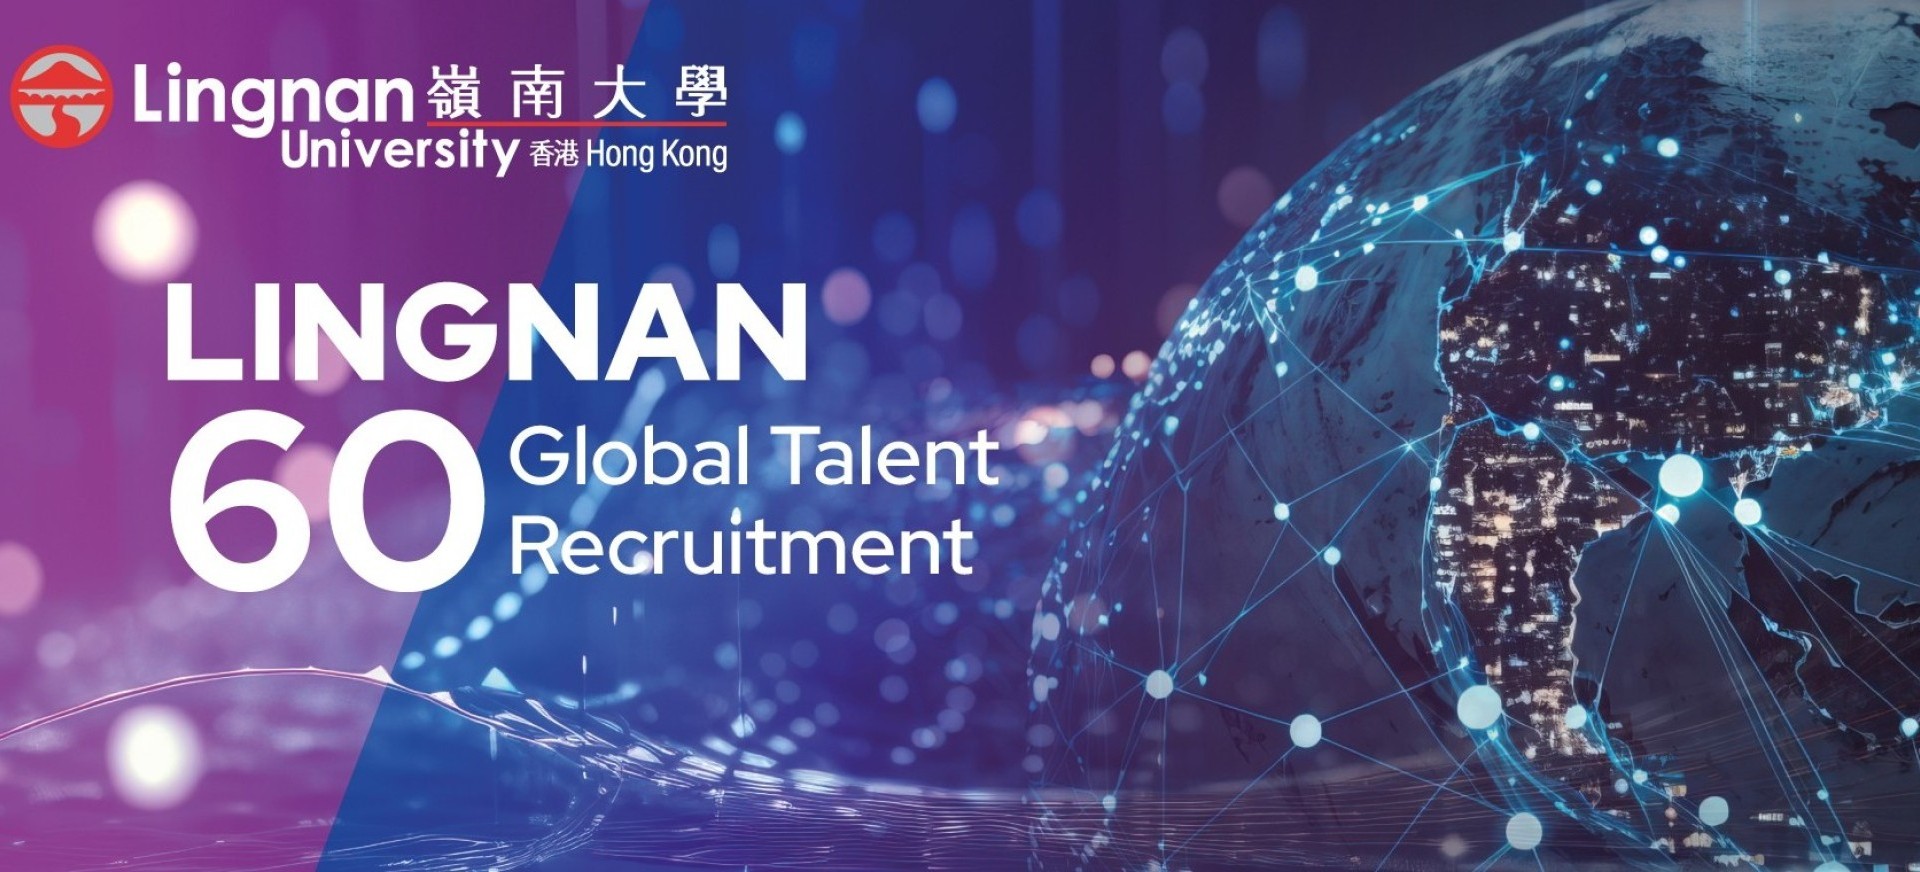 Lingnan-60 Global Talent Recruitment